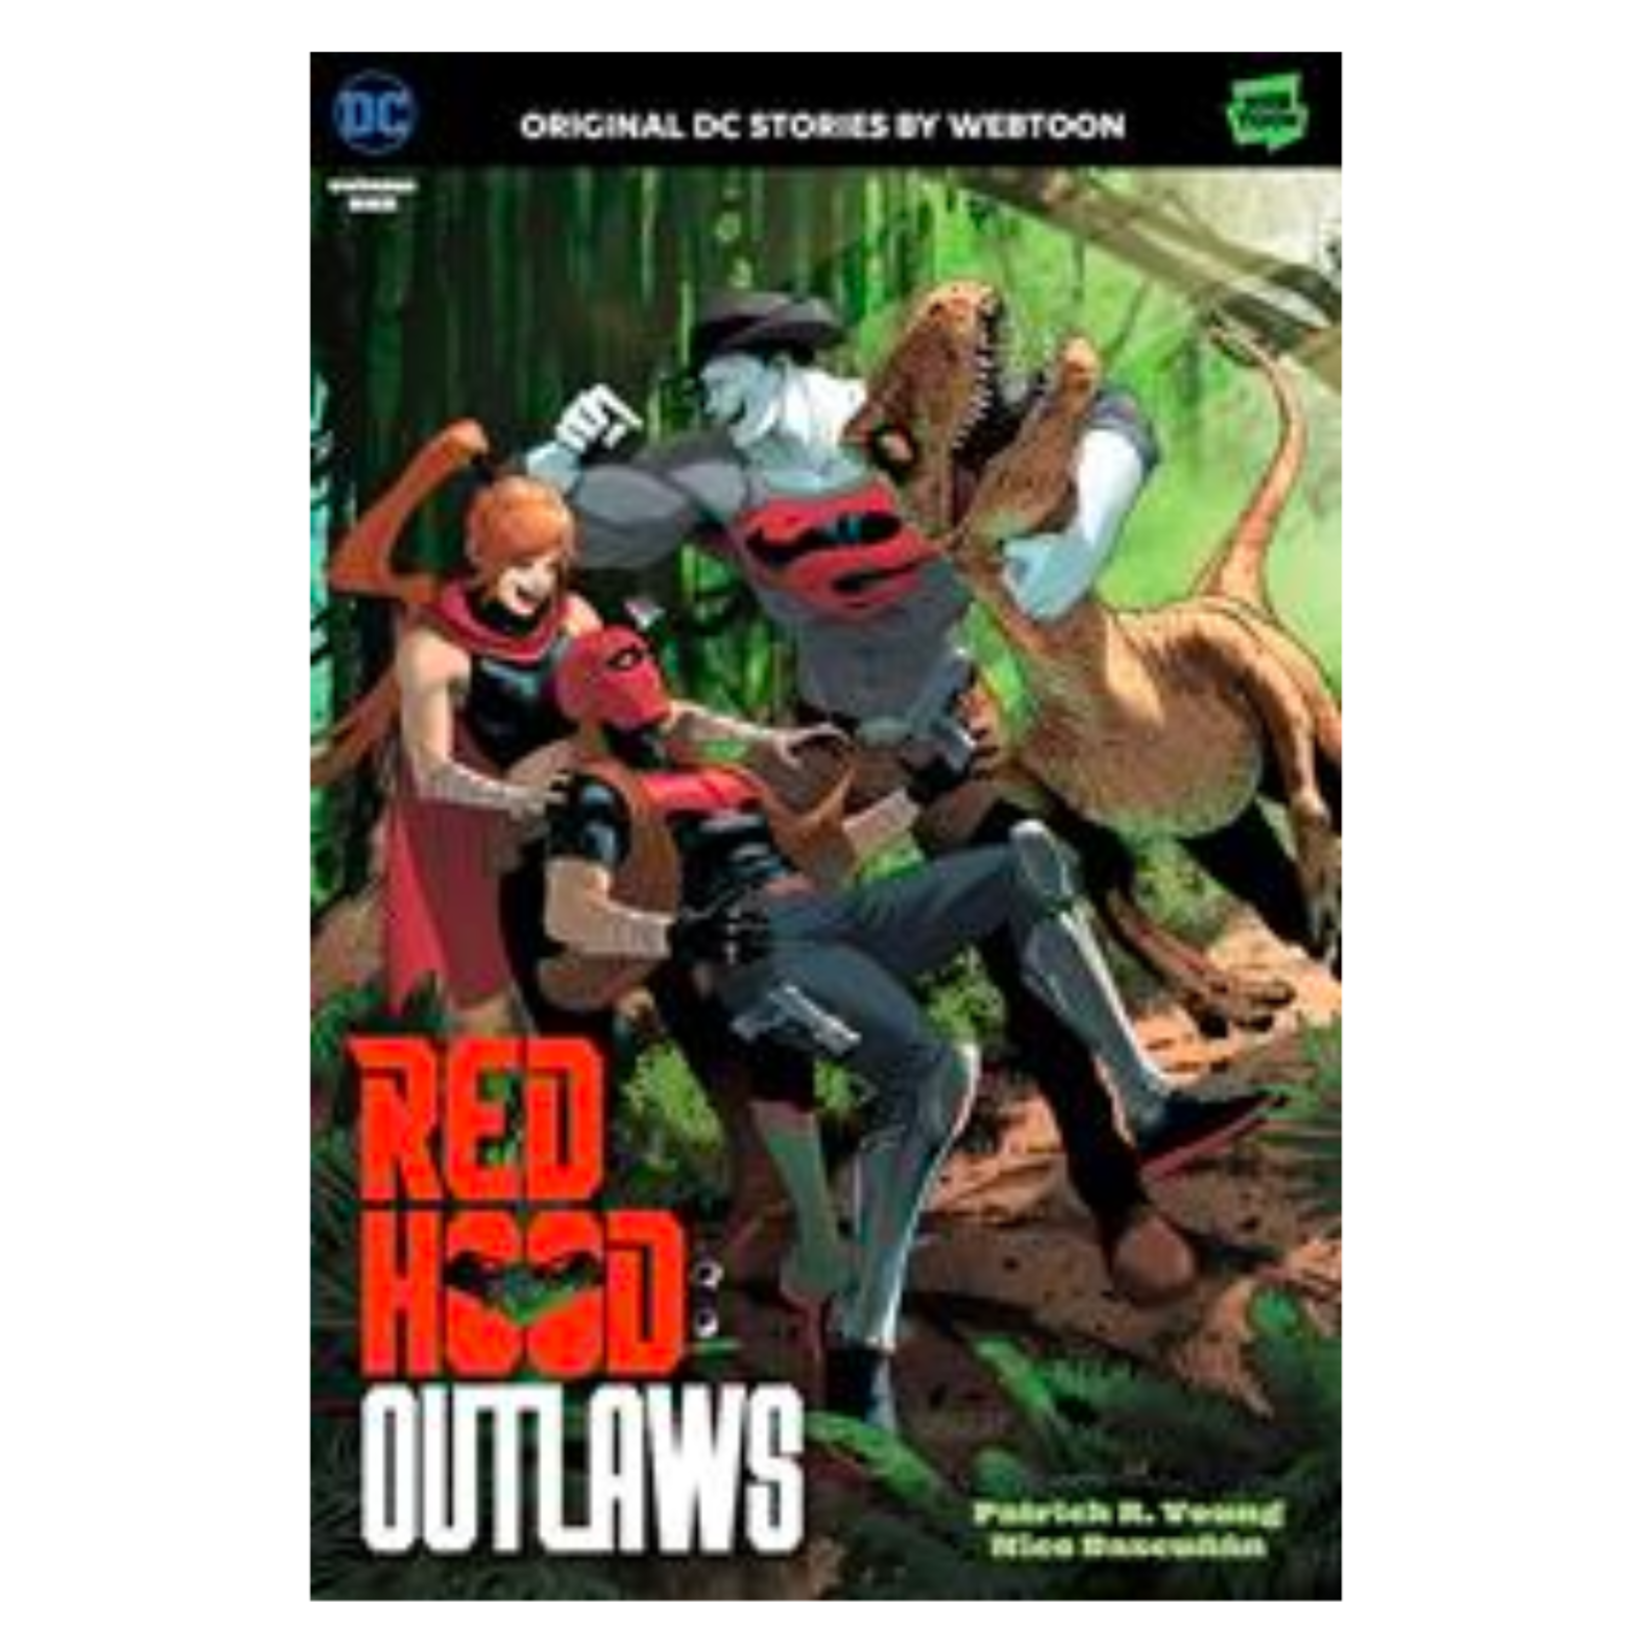 DC Comics Red Hood Outlaws TP Vol 01